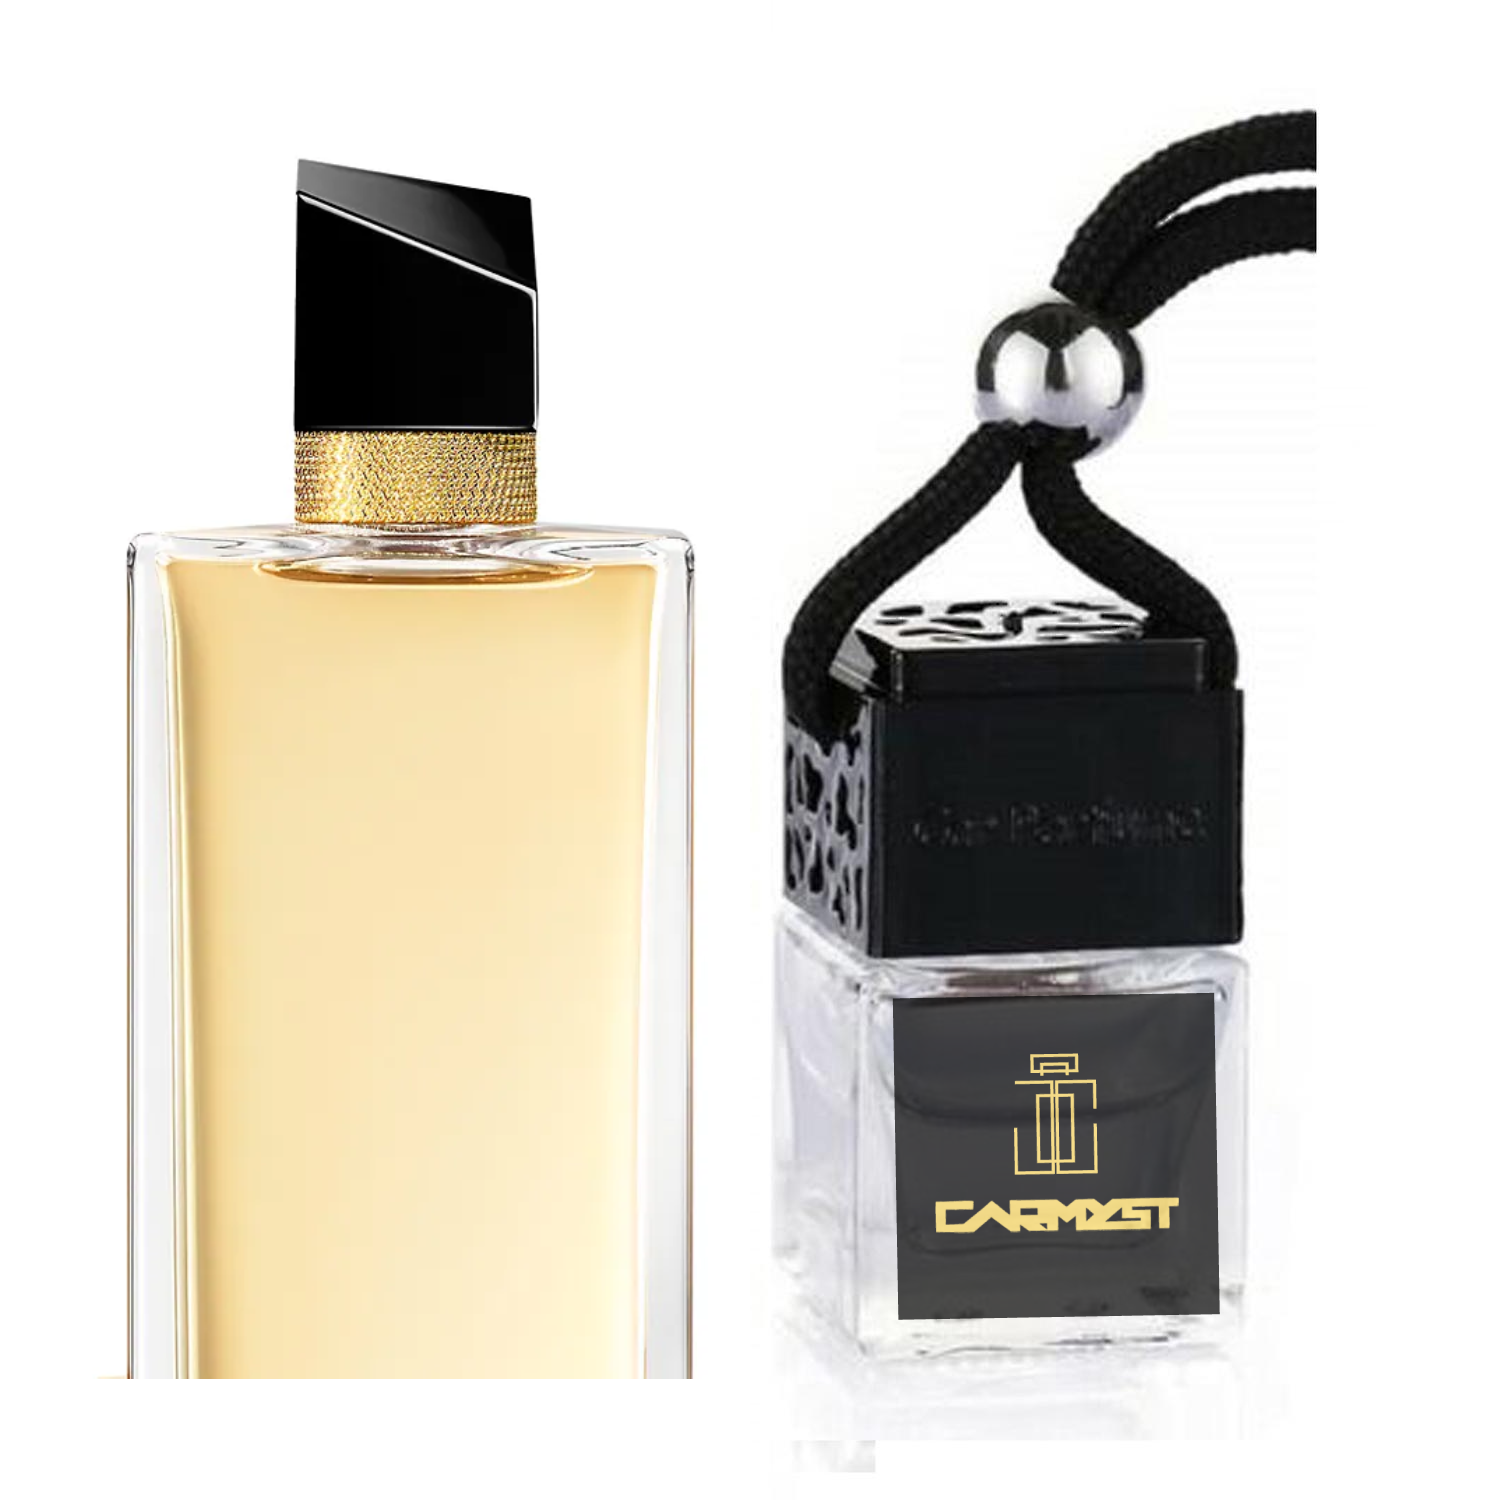 CLEMT Car Perfume Diffuser DM1 PEBBLE - Premium Car Air Freshener